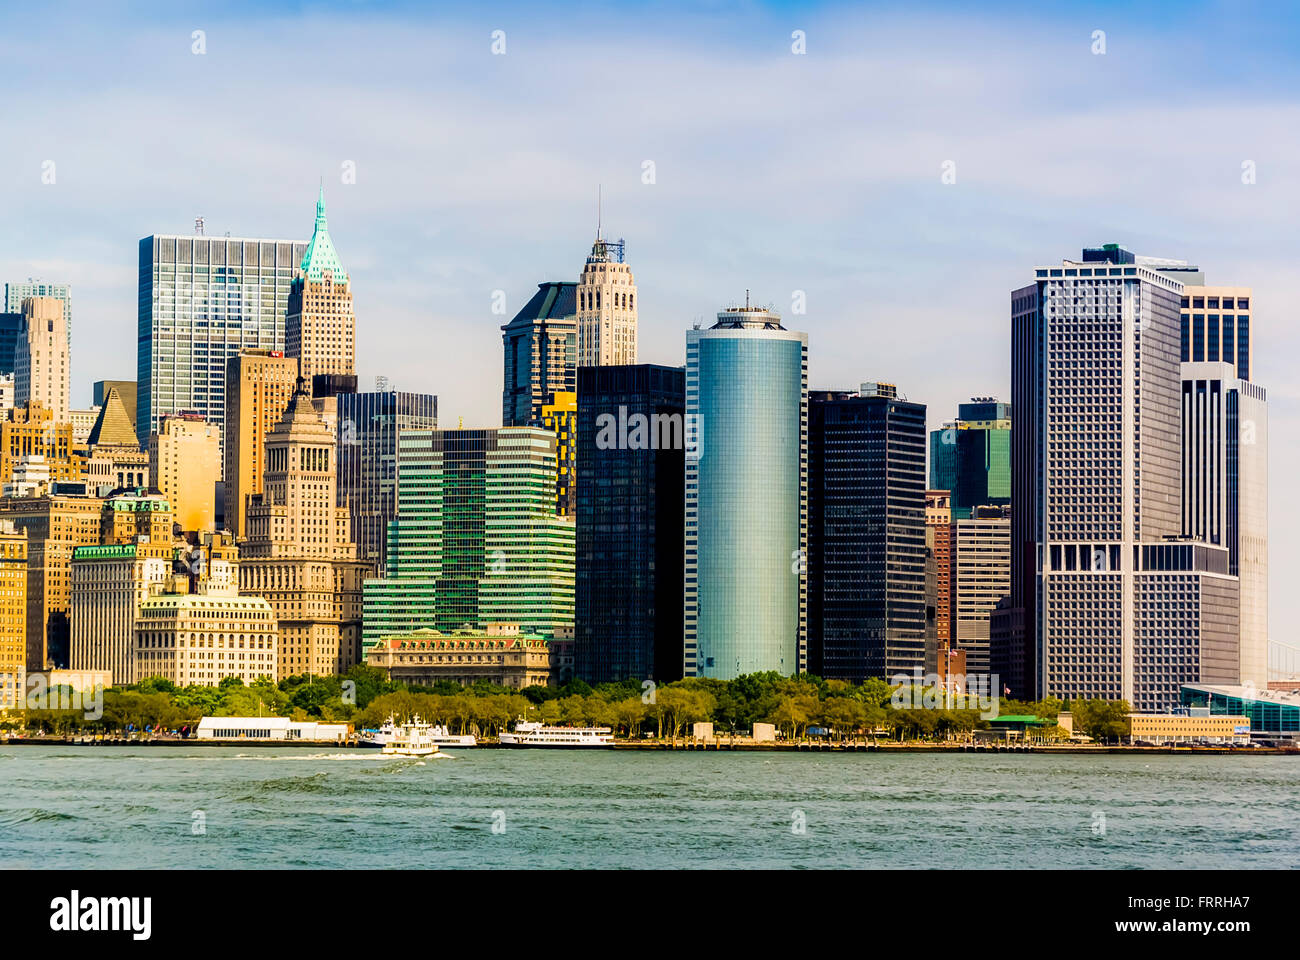 Battery Park, Lower Manhattan, New York city, USA, viewed from Upper Bay harbor Stock Photo